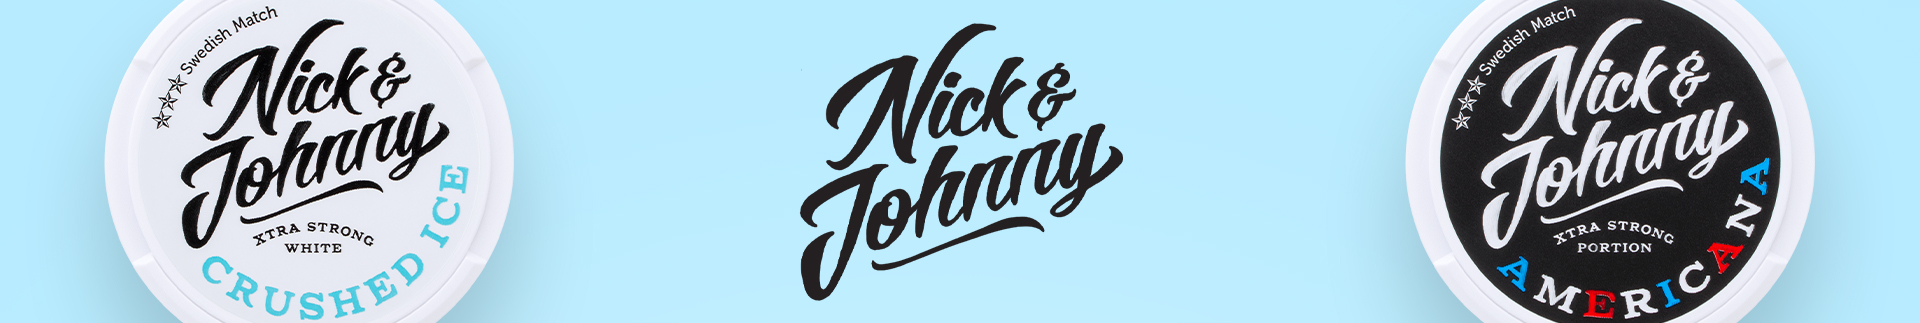 Nick and Johnny